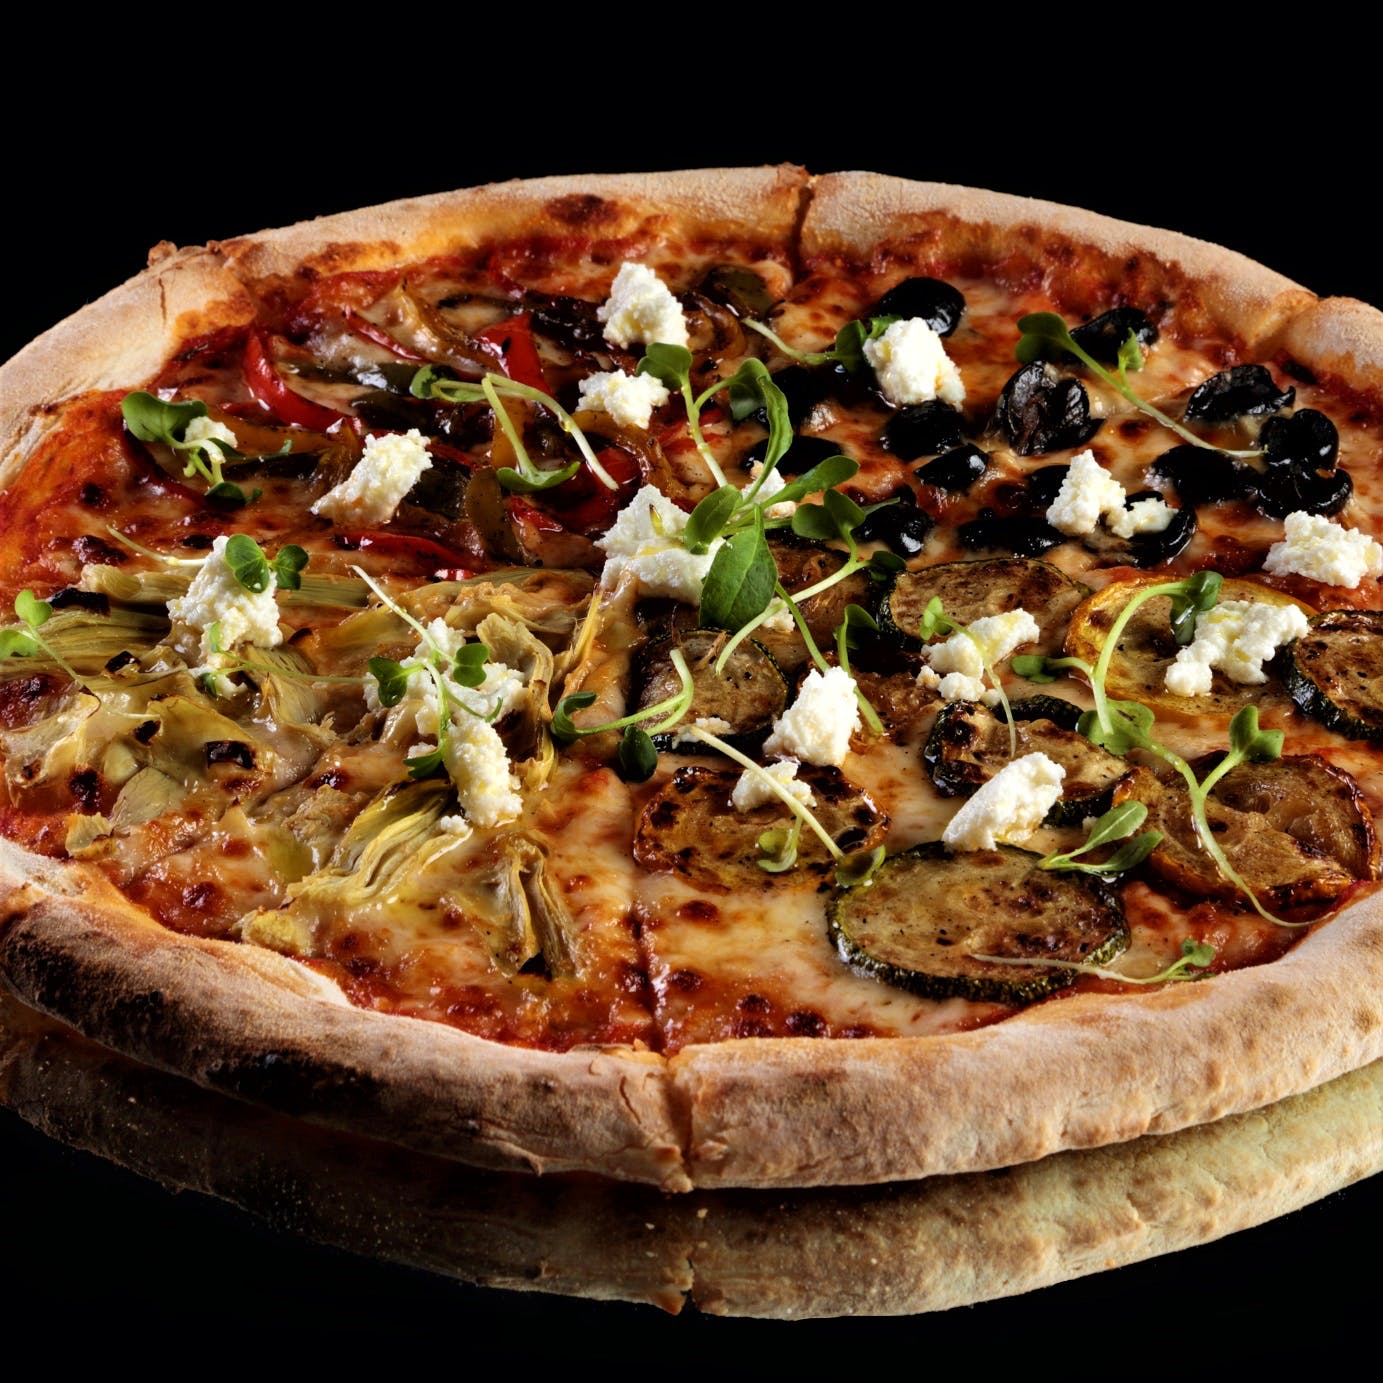 Dish,Food,Pizza,Cuisine,California-style pizza,Ingredient,Pizza cheese,Flatbread,Italian food,Tarte flambée